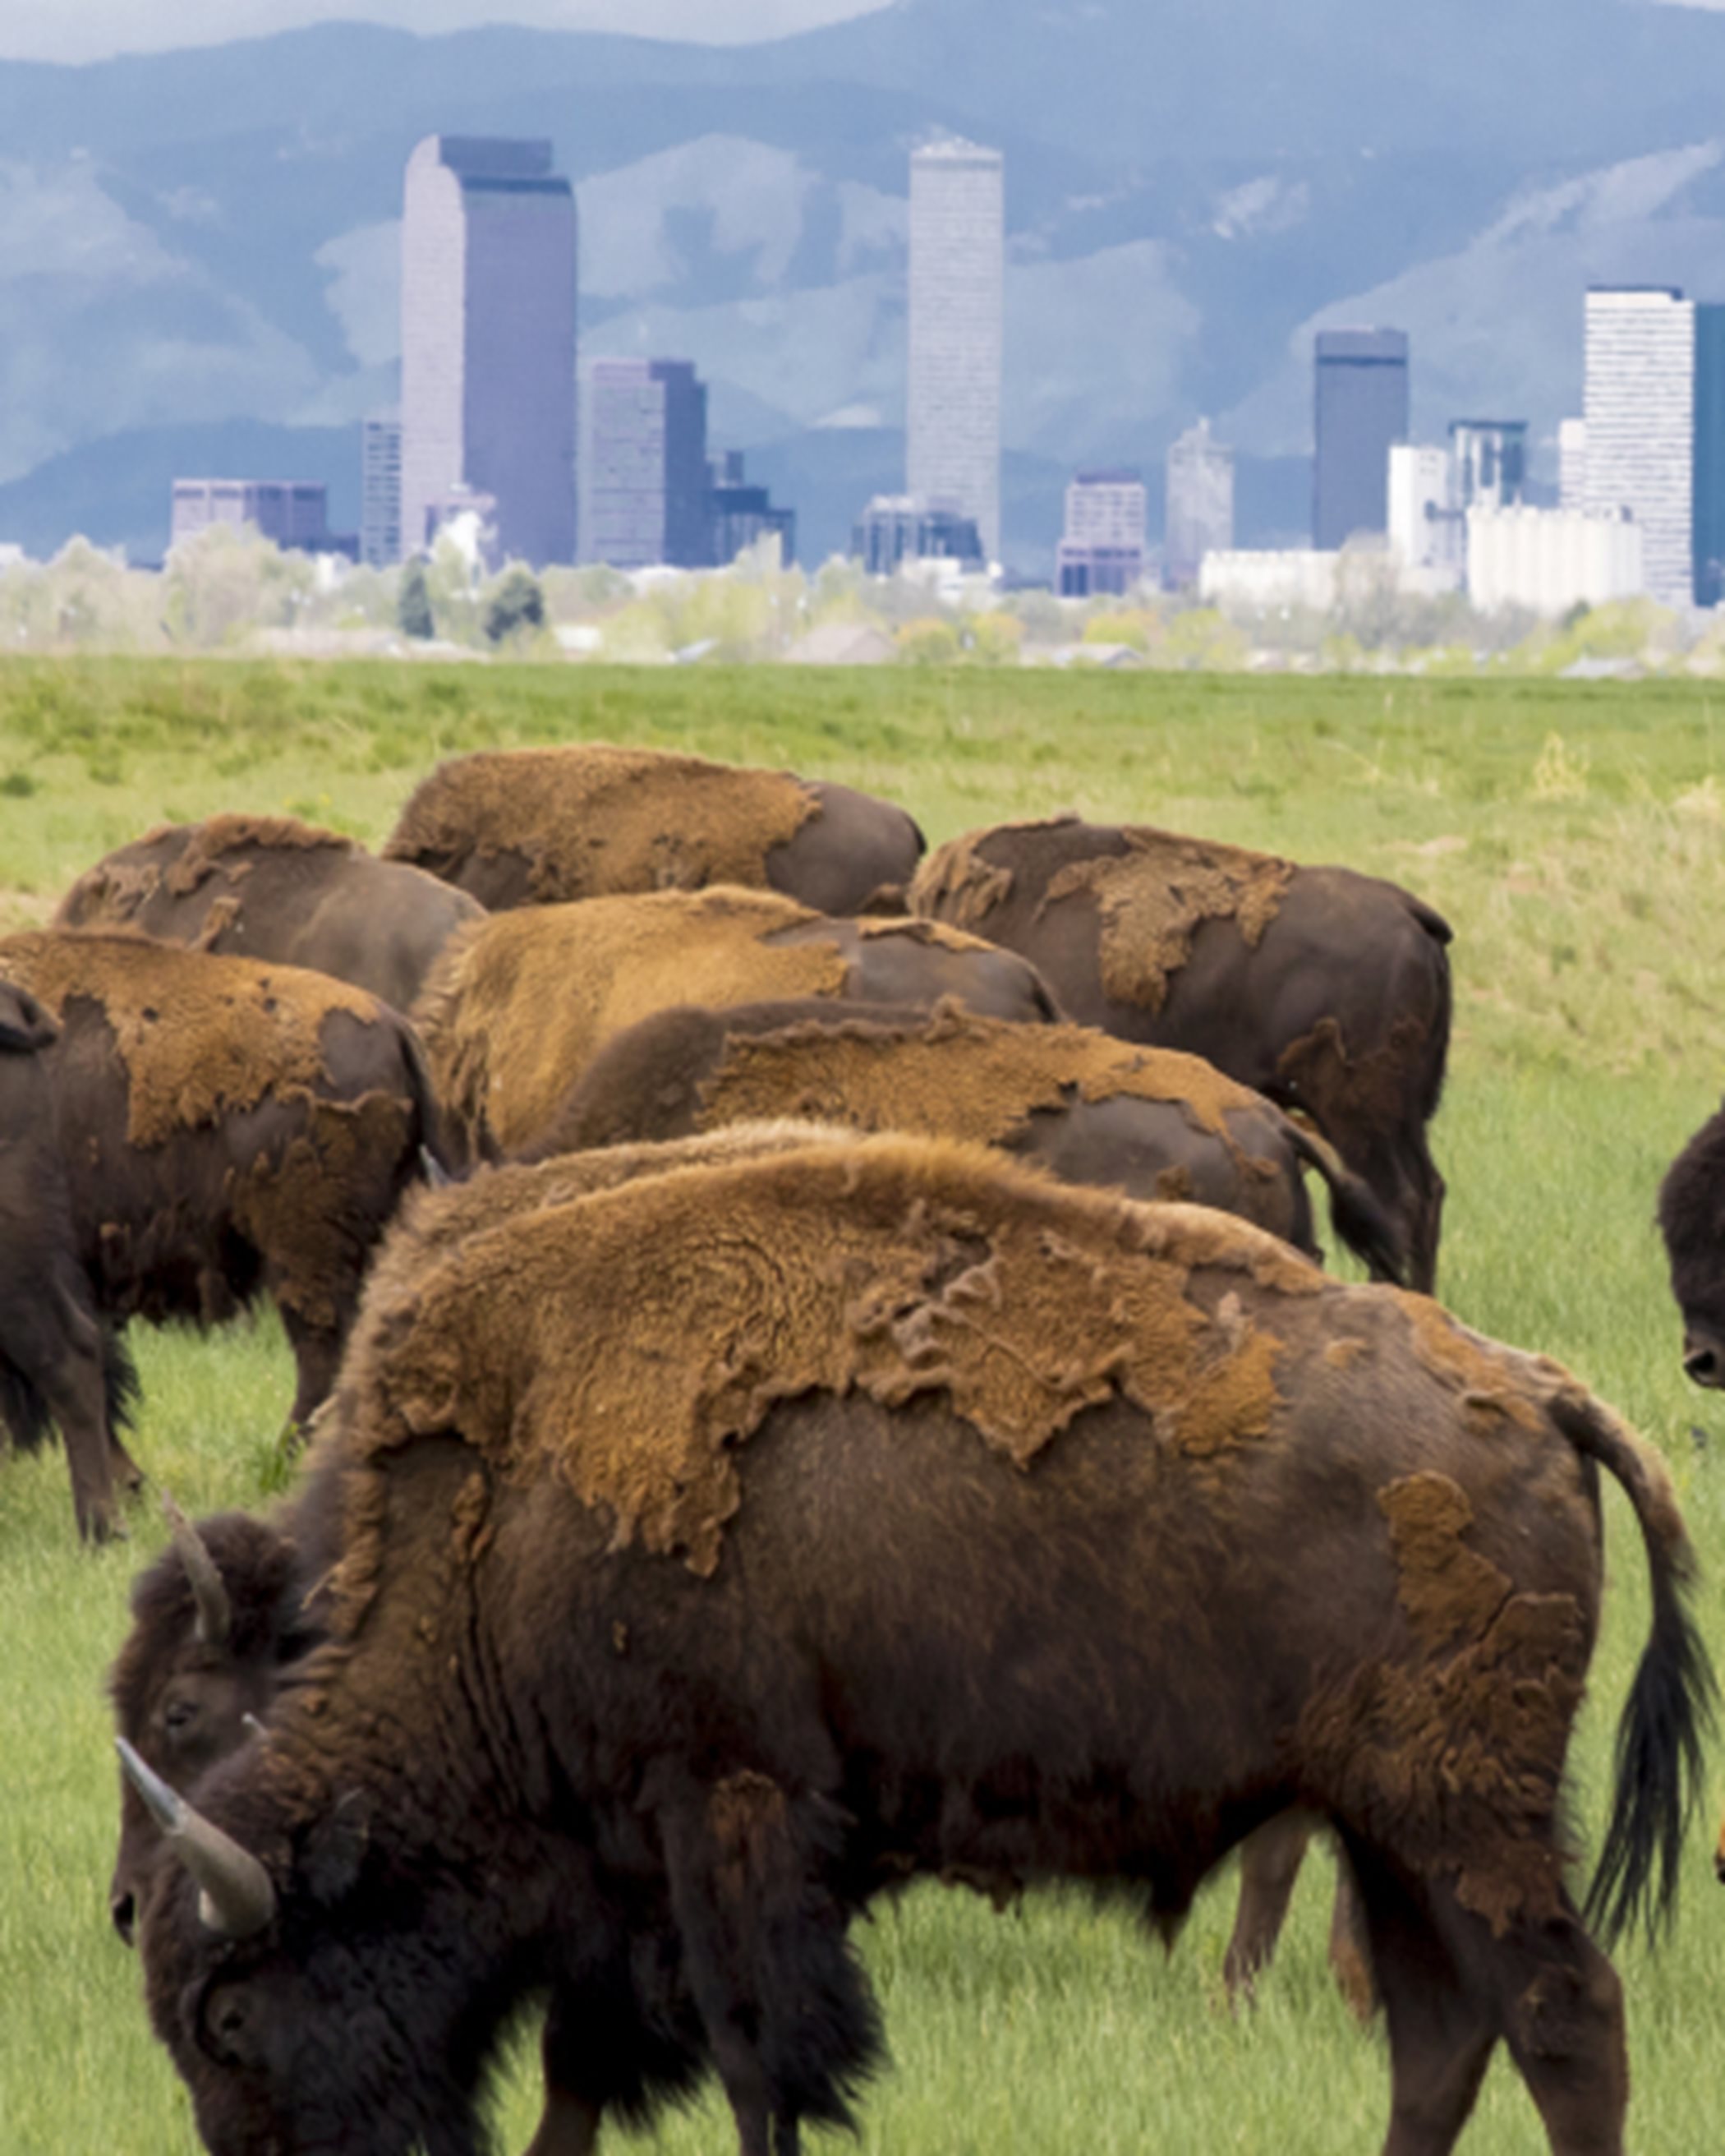 Turnberry Buffalo Herd Nature Preserve overlook